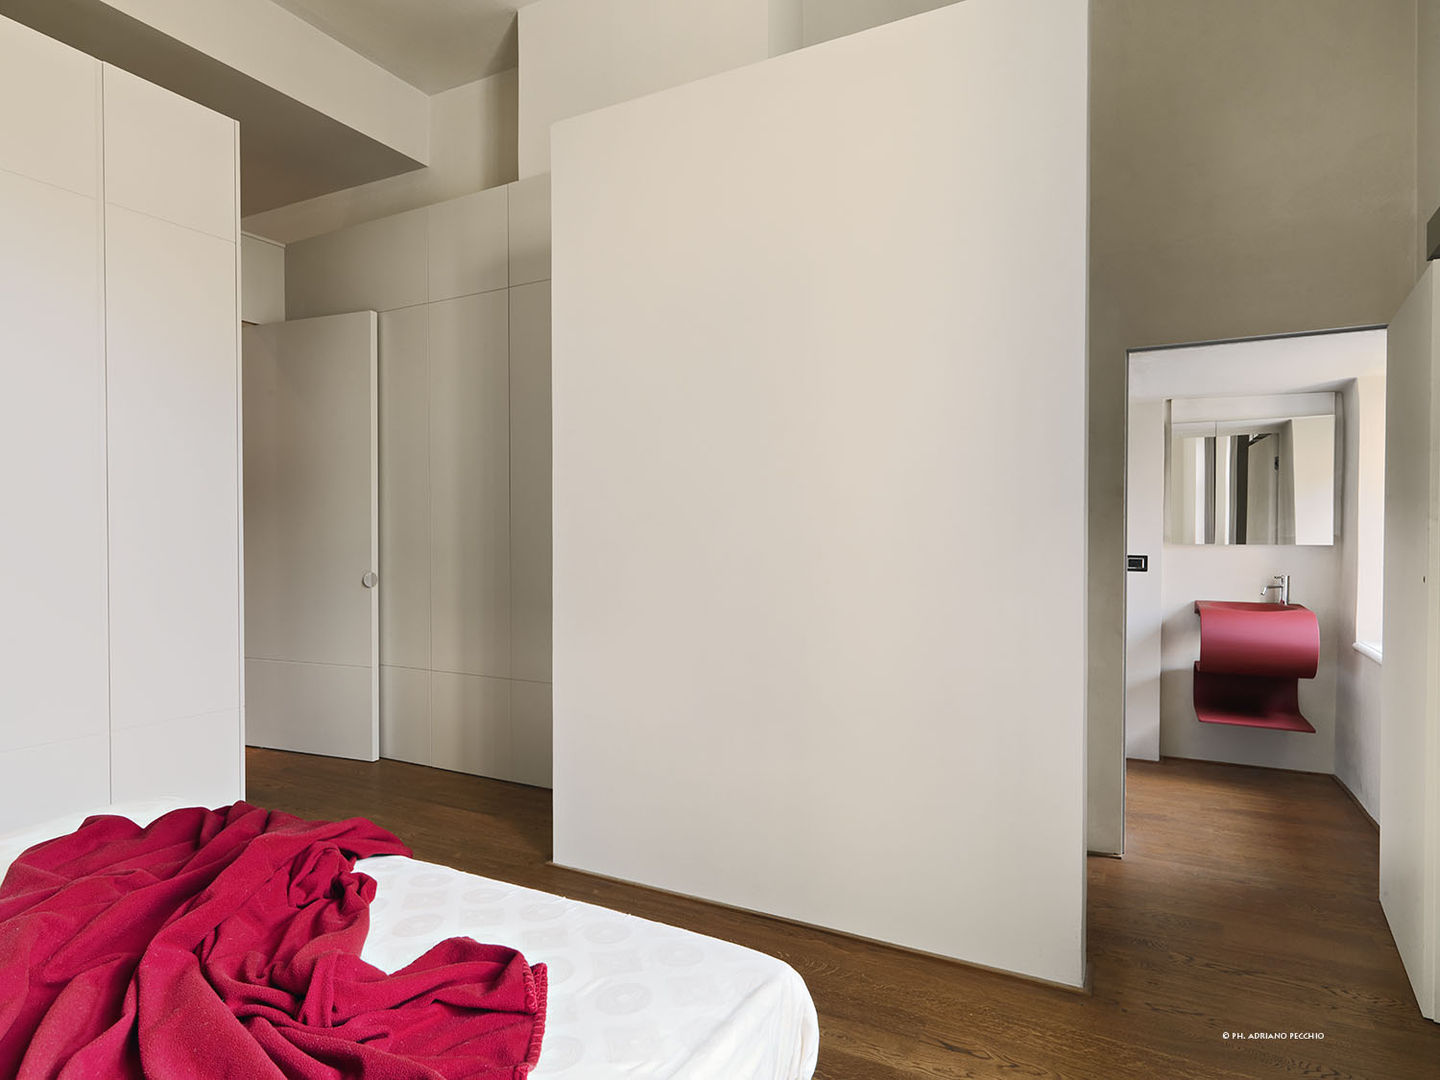 Appartamento in centro storico, studio antonio perrone architetto studio antonio perrone architetto Modern style bedroom